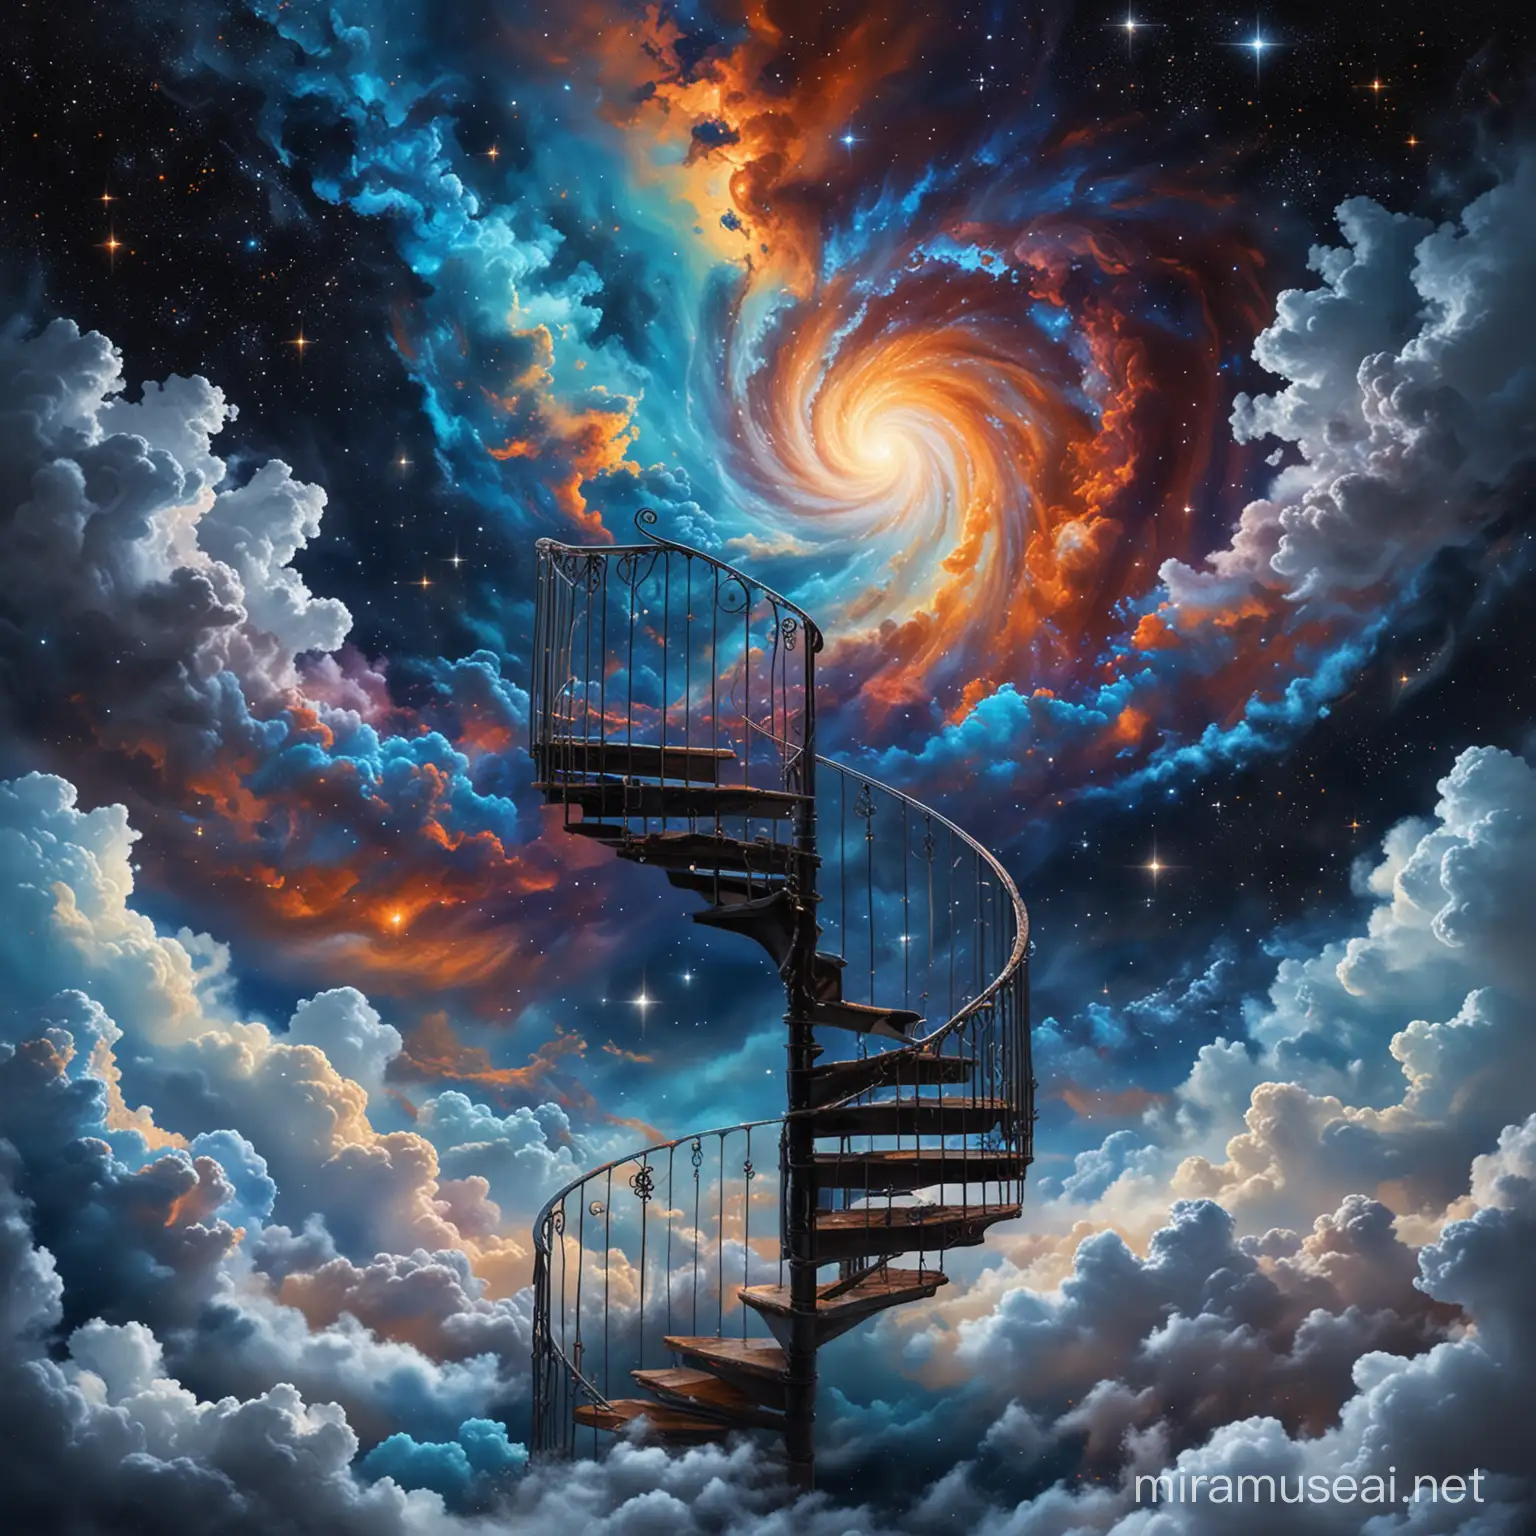 Enchanting Staircase to Galactic Nebula in Luminous Acrylics